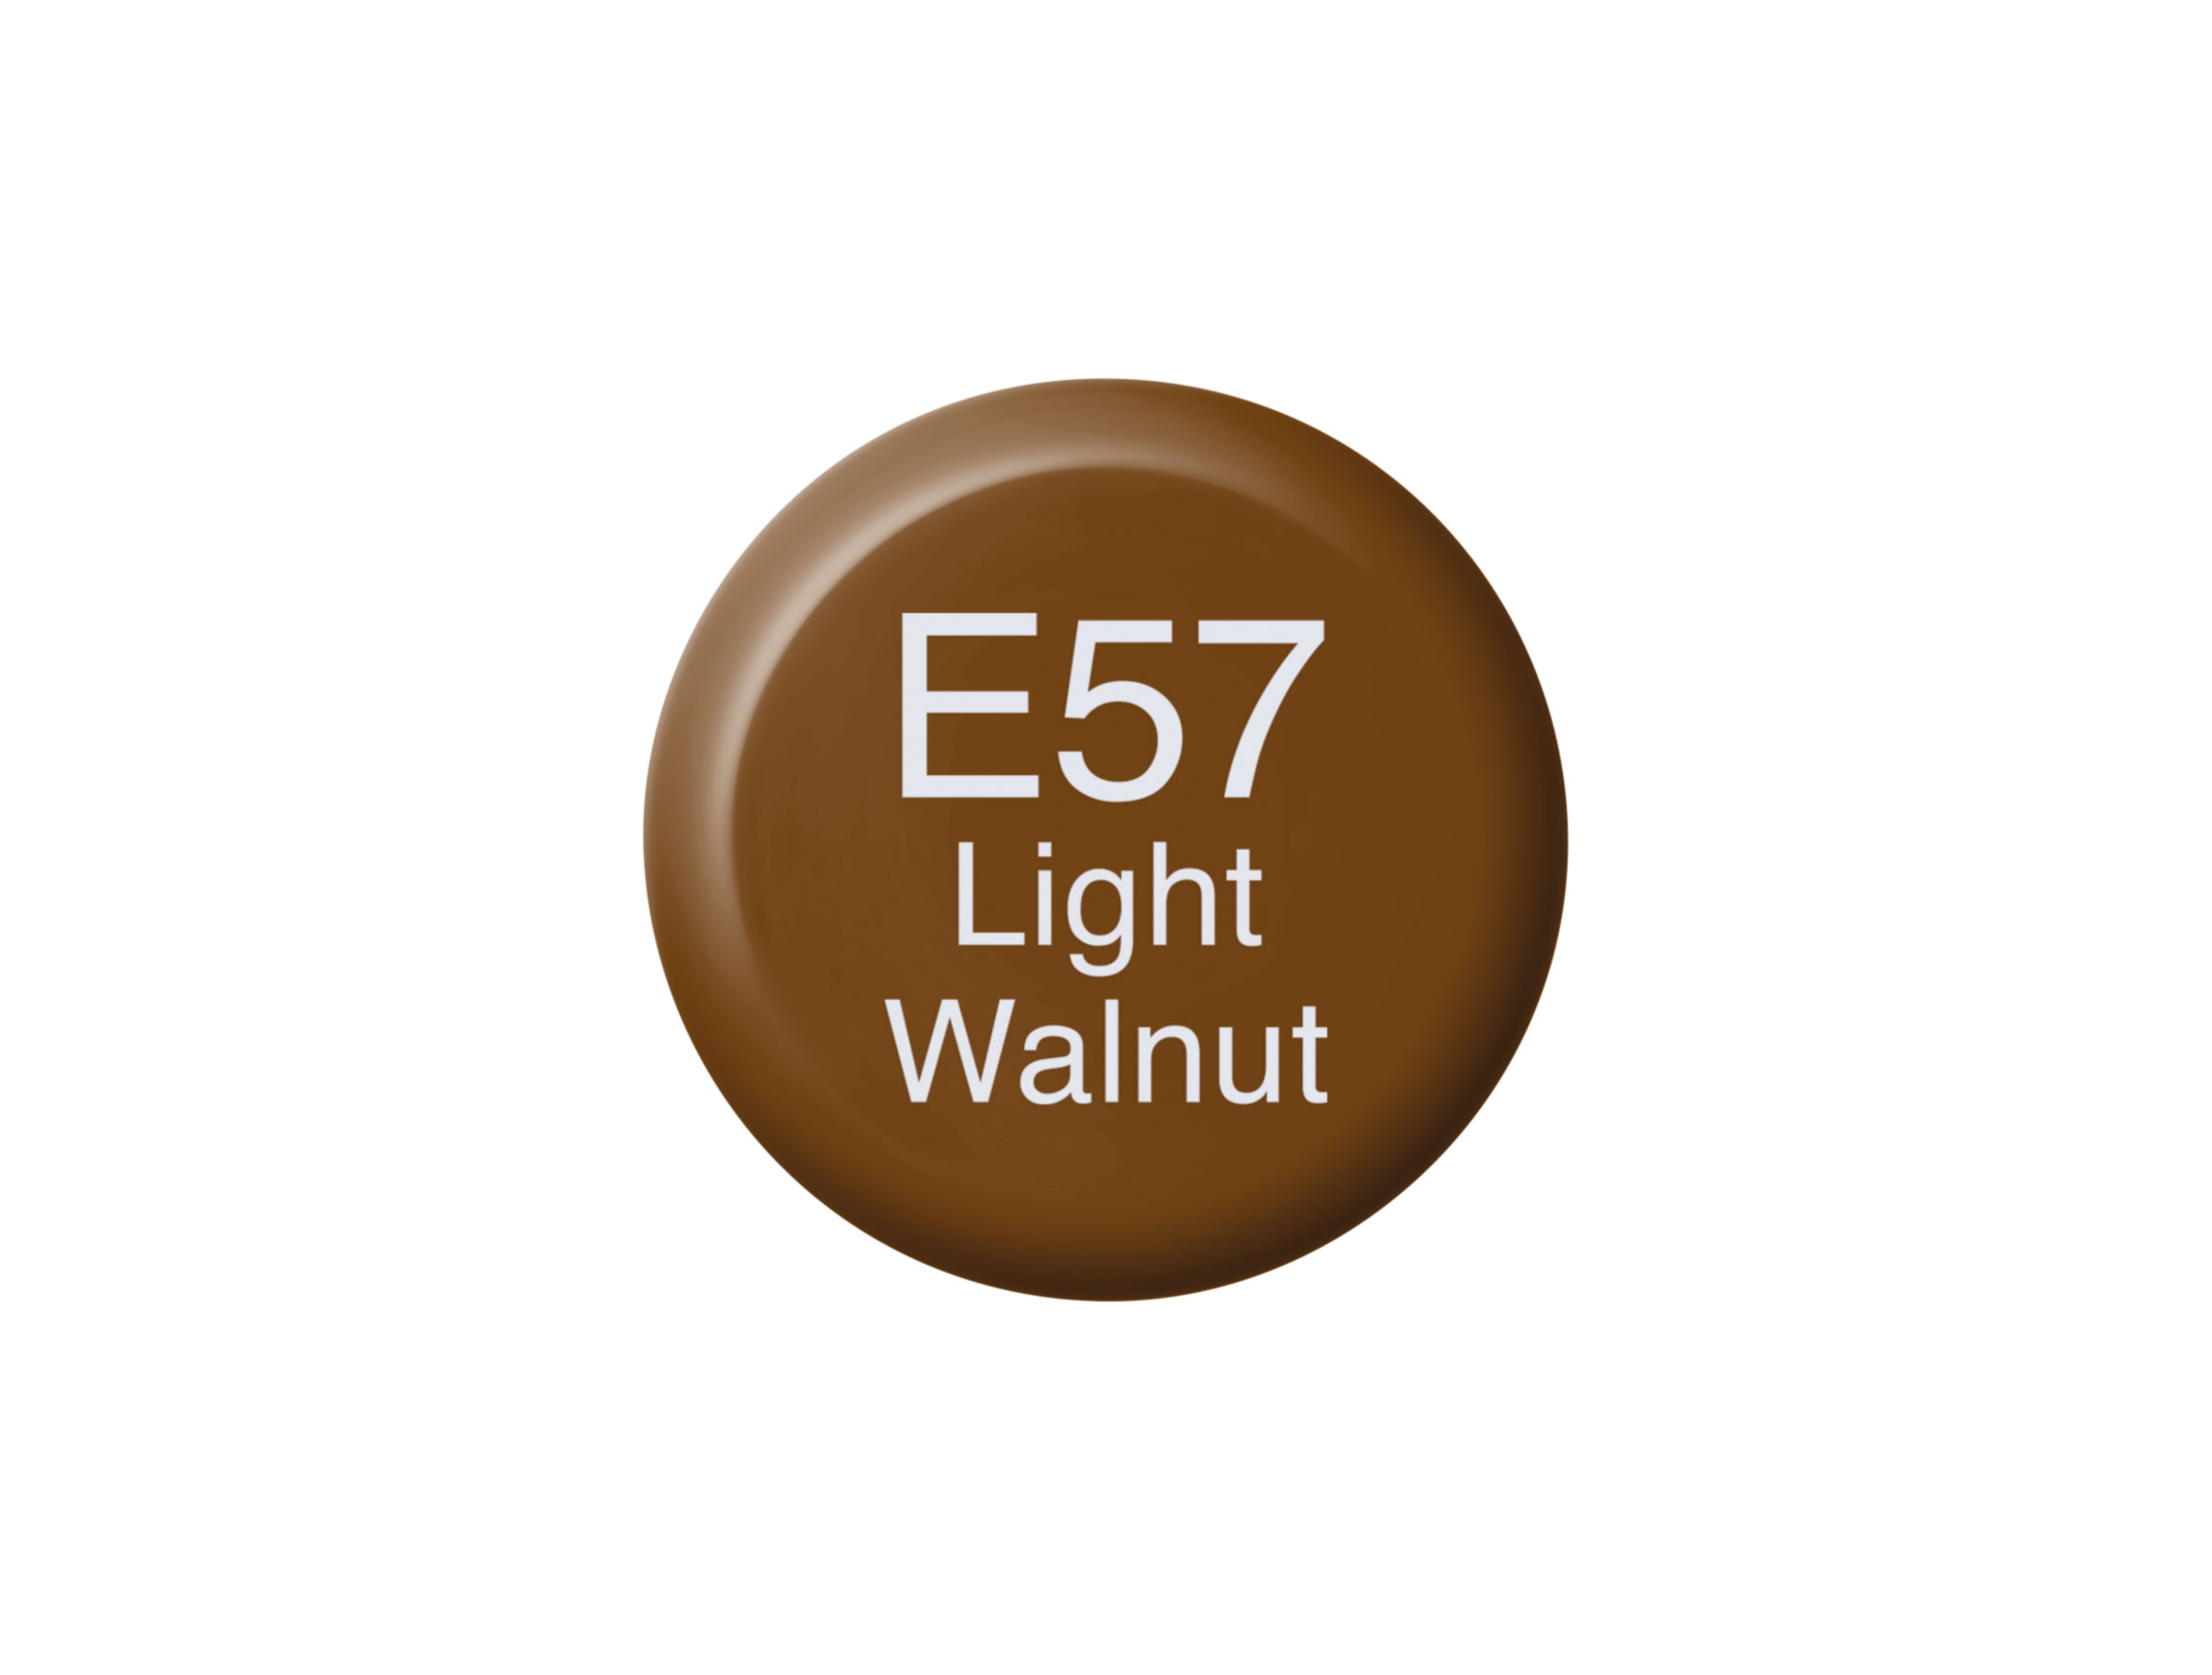 Copic Ink E57 Light Walnut